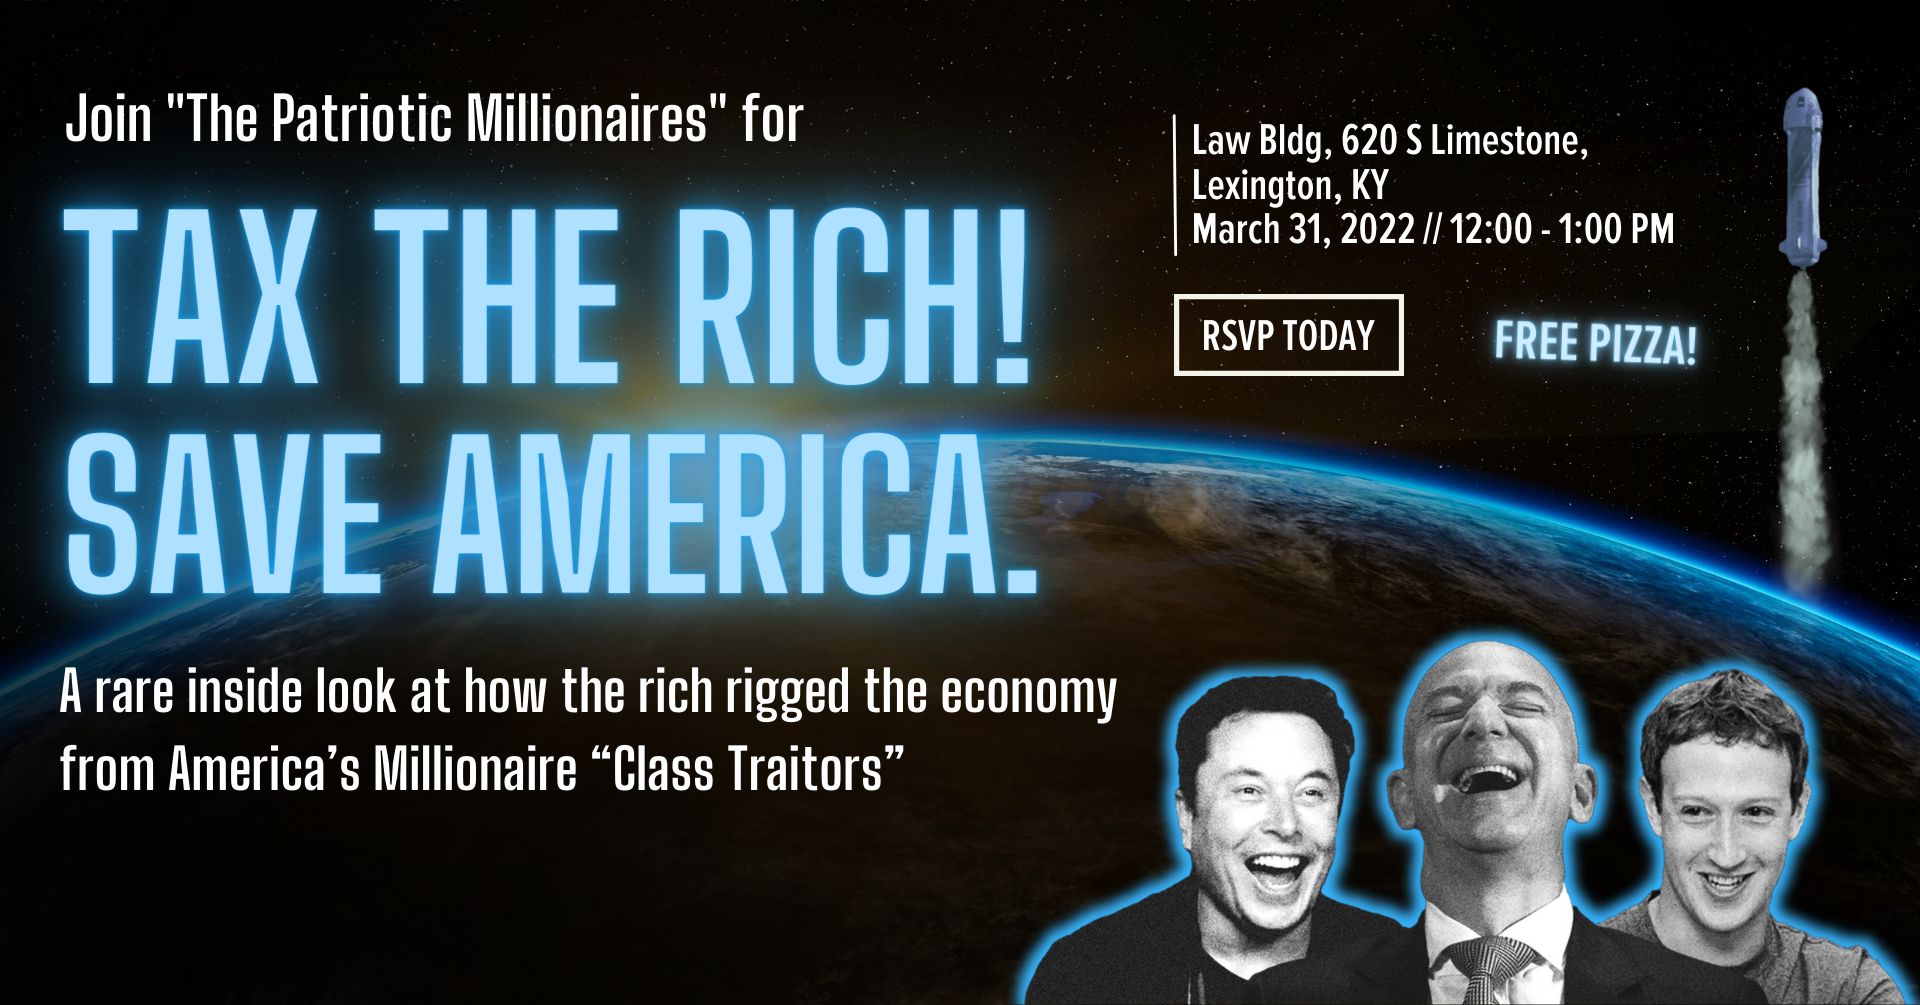 Tax The Rich! Save America. - University of Kentucky Law School, Lexington, Kentucky, United States